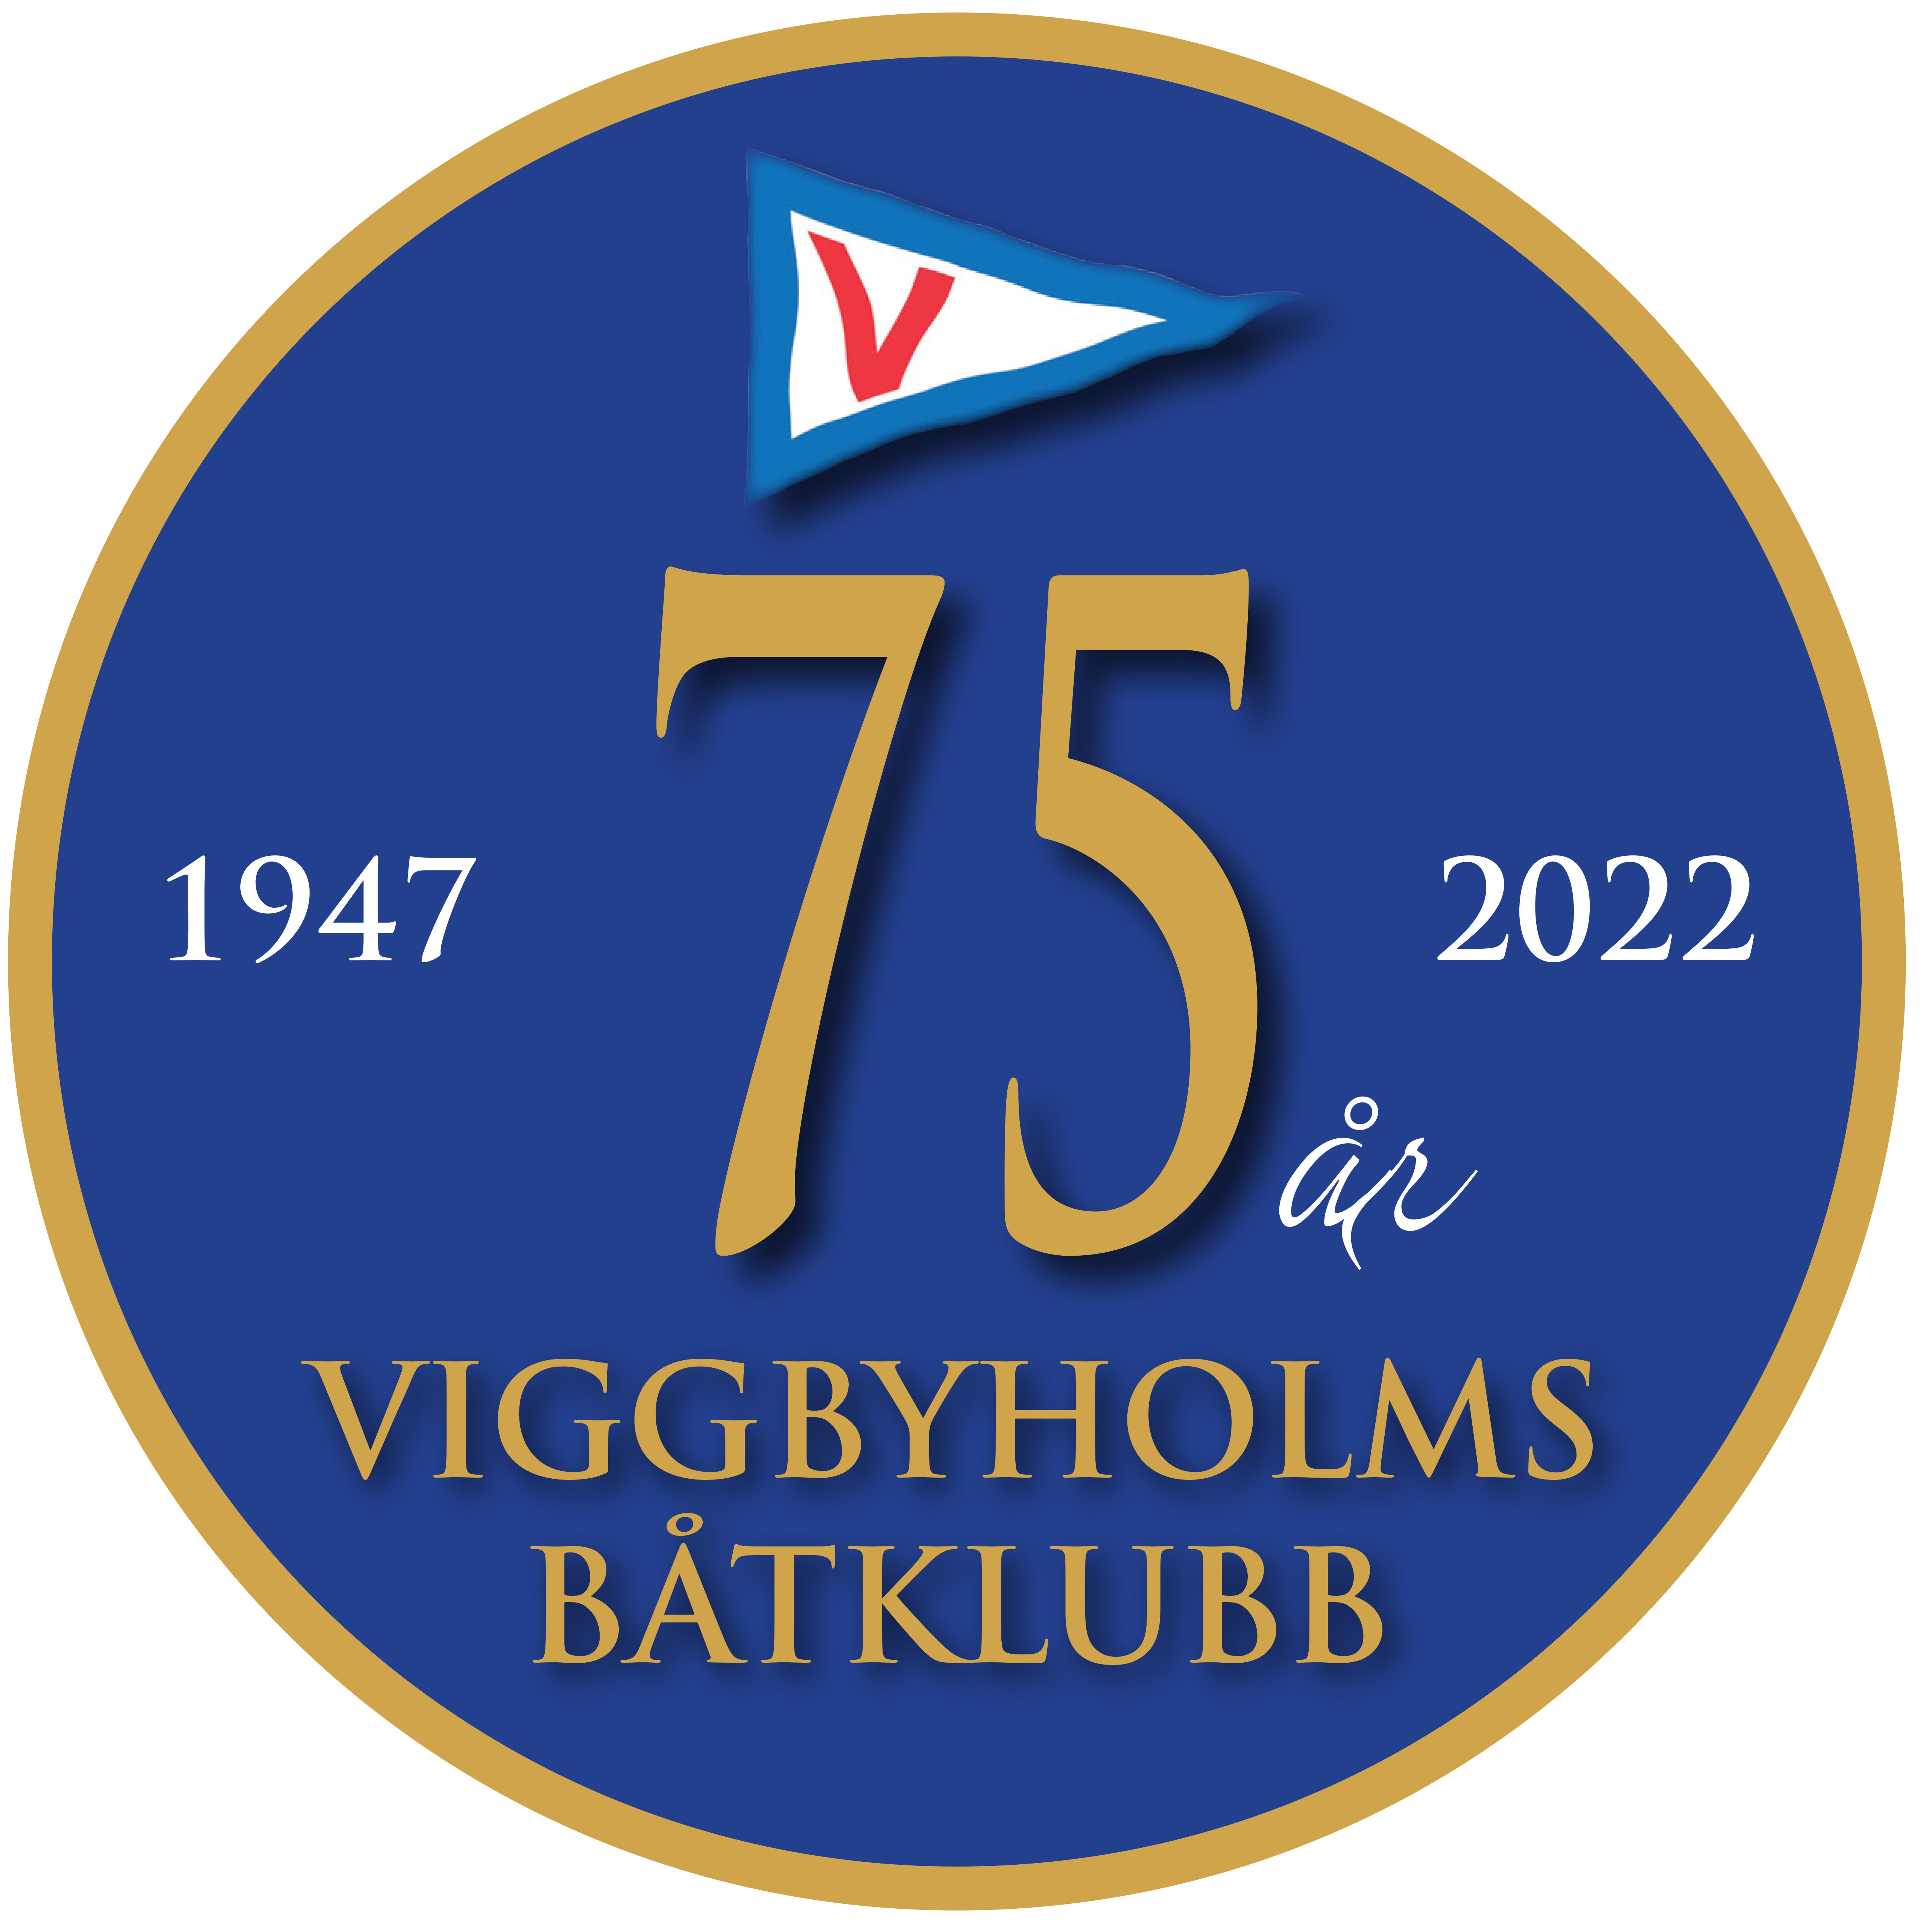 VBK 75 år rund